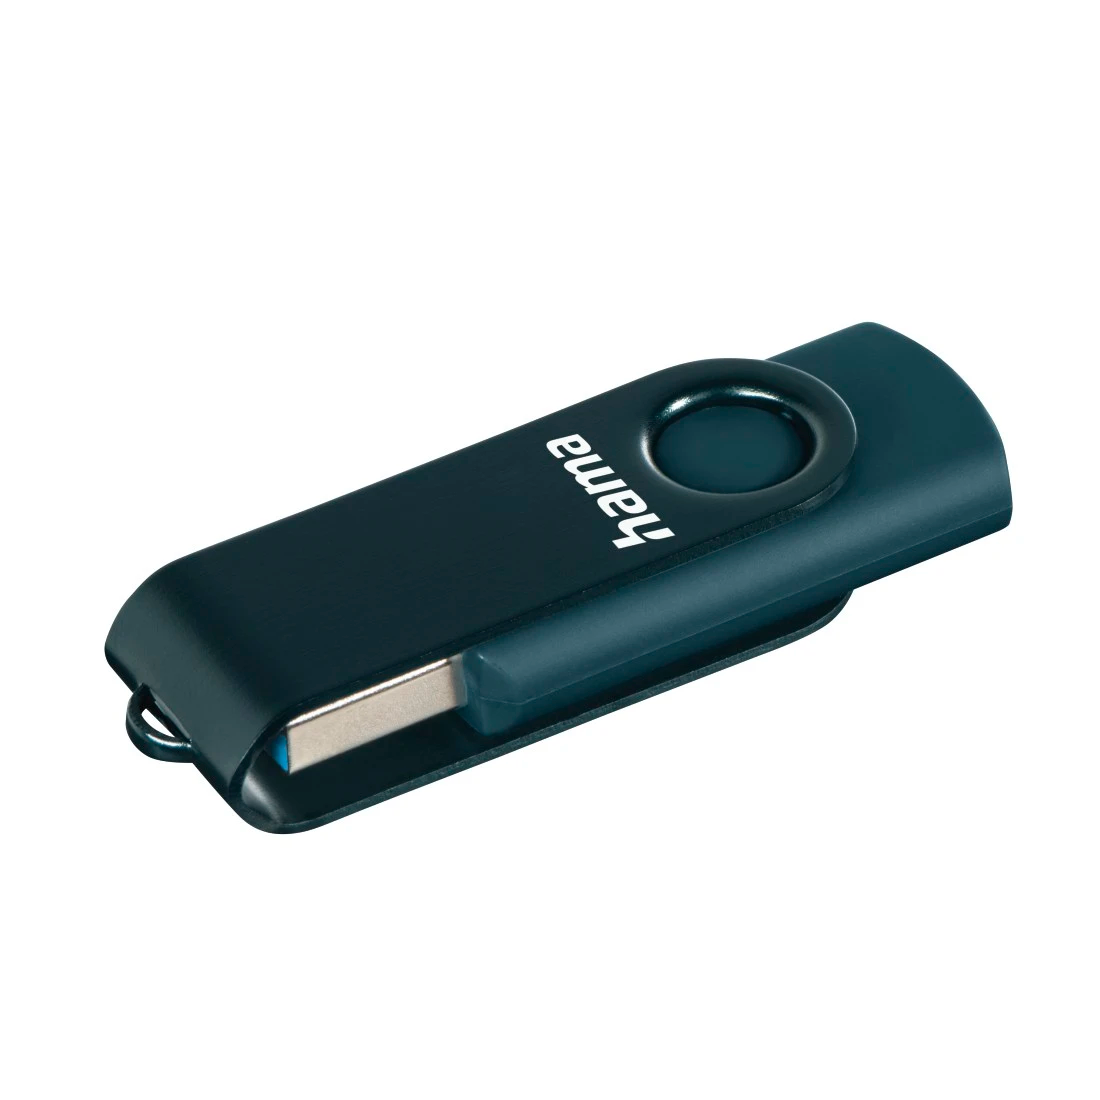 Hama Rotate USB 3.0 256GB USB Memory Stick - Blue | 435927 from Hama - DID Electrical